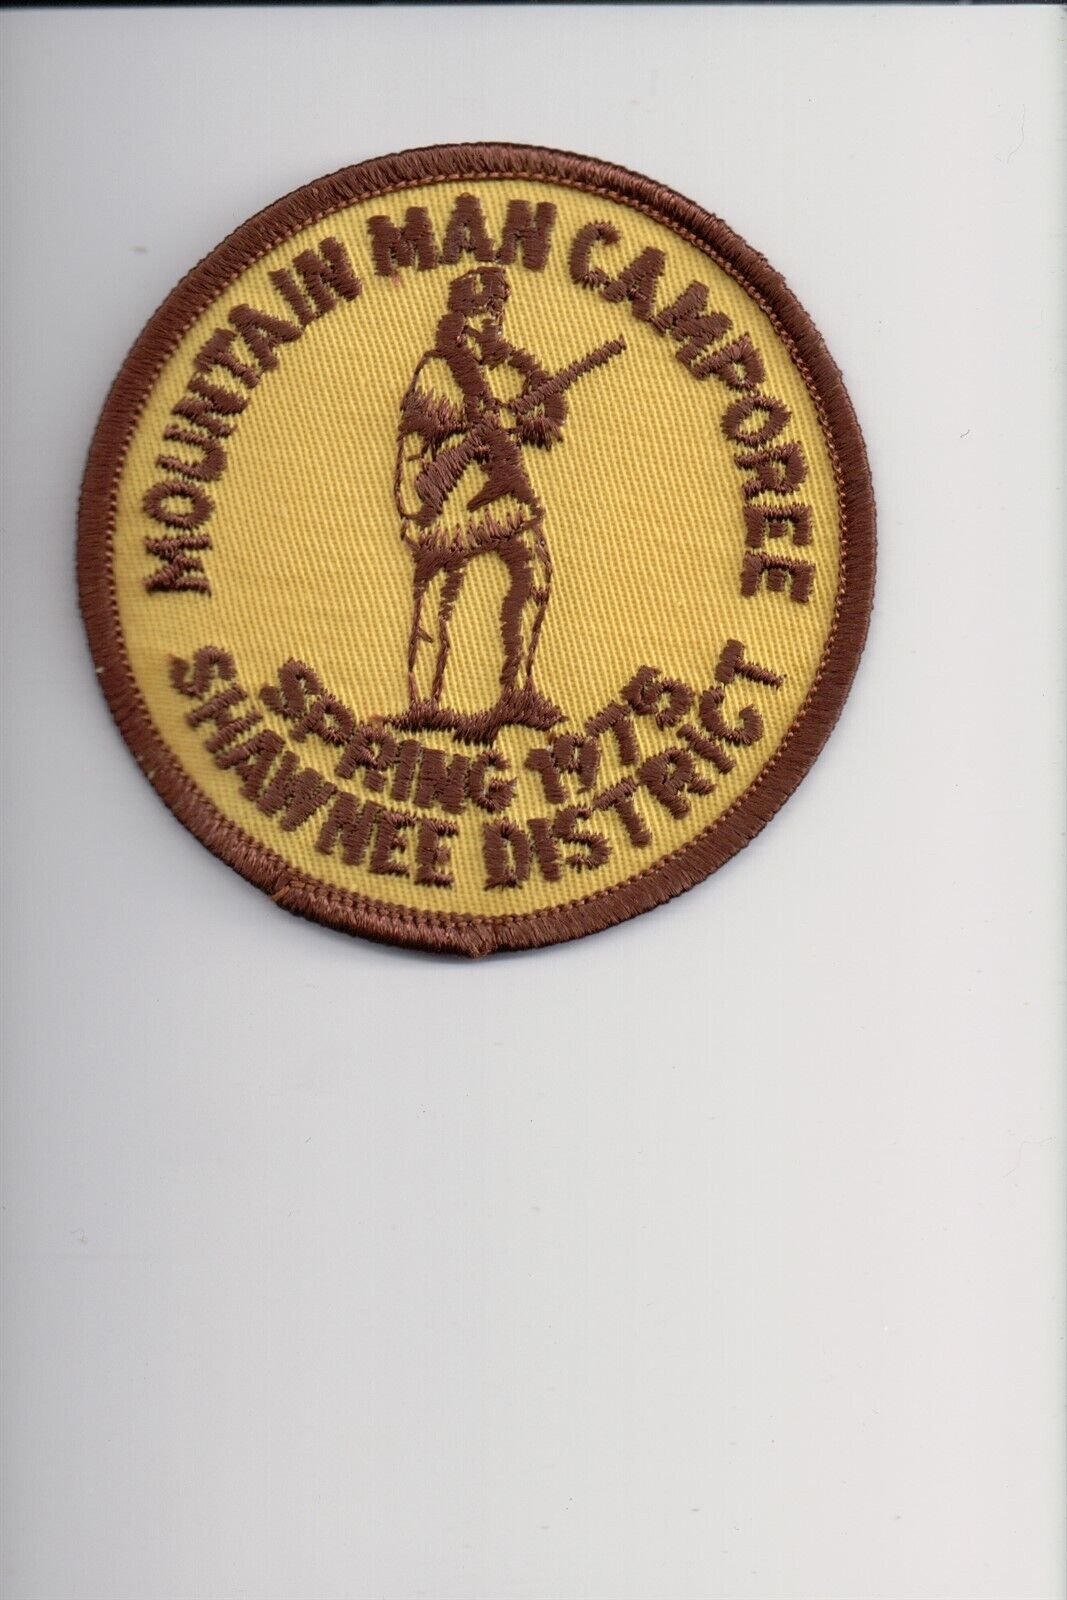 1975 Shawnee District Mountain Man Camporee patch